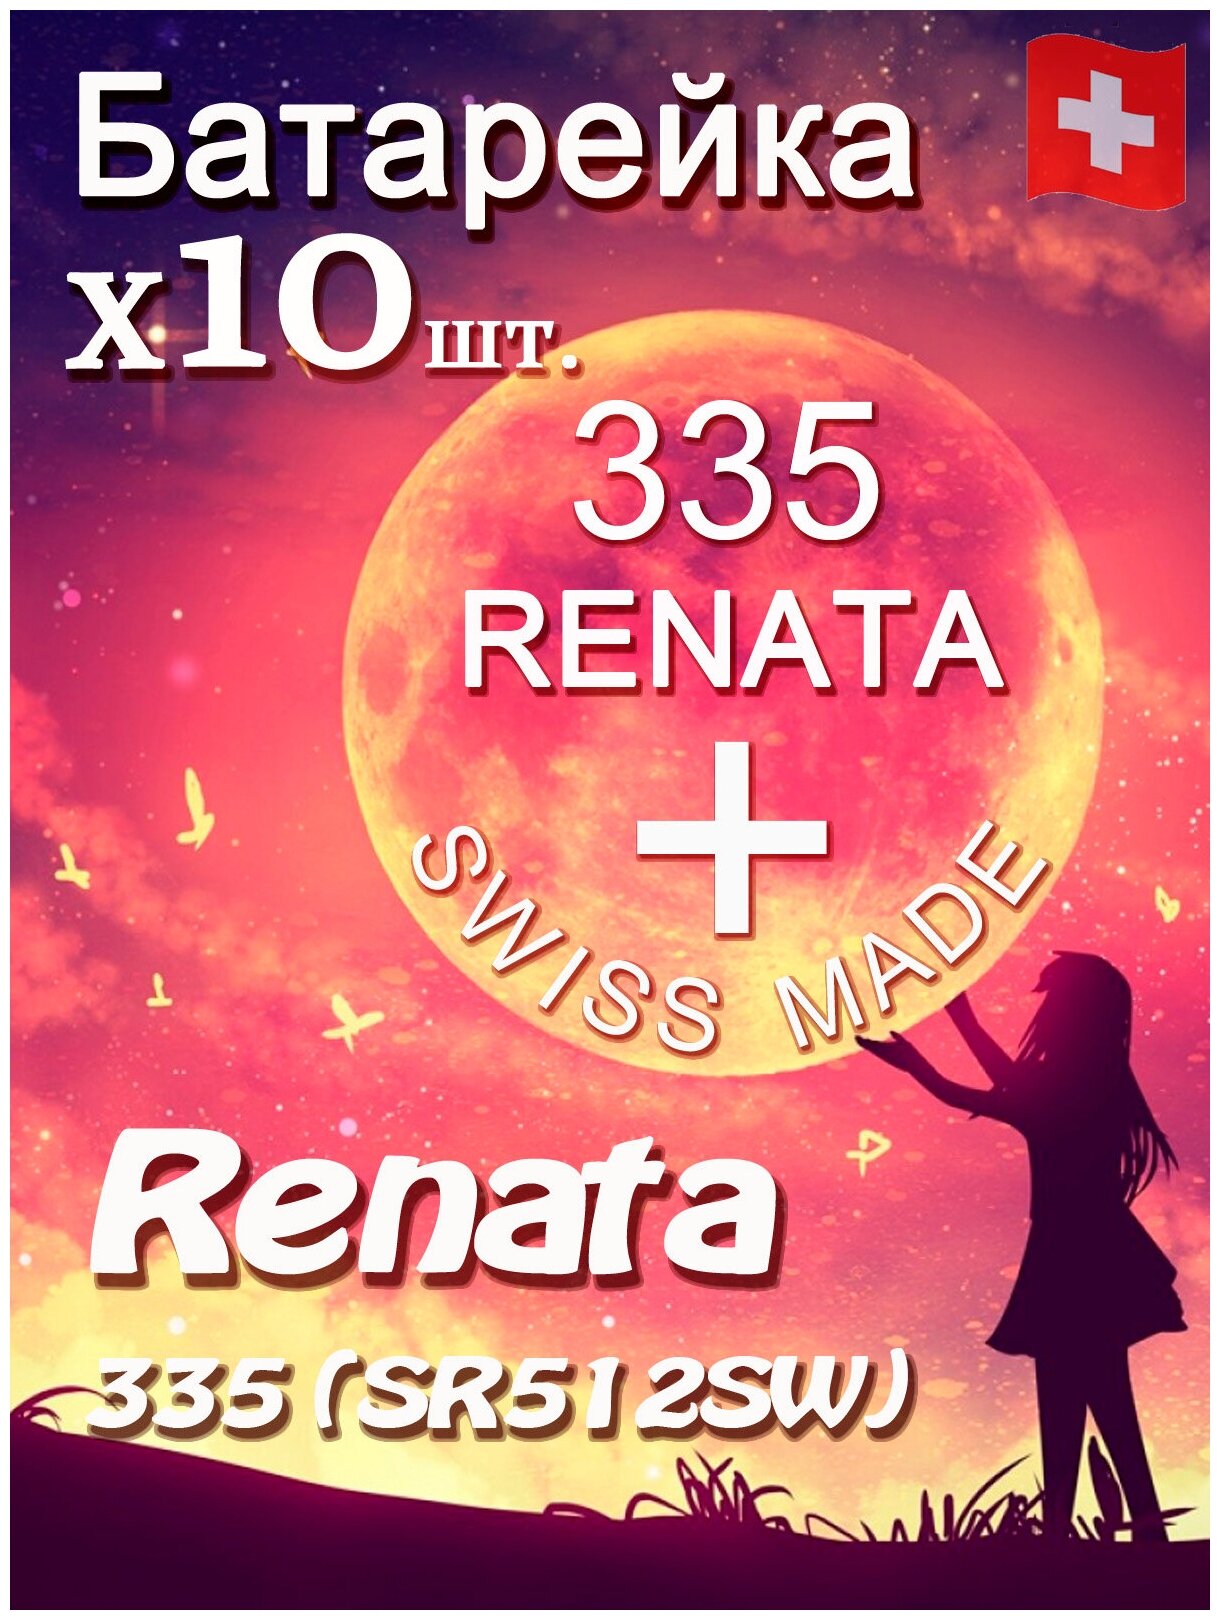 Батарейка Renata 335 10шт/Элемент питания рената 335 В10 (SR512SW)(без ртути) 10шт